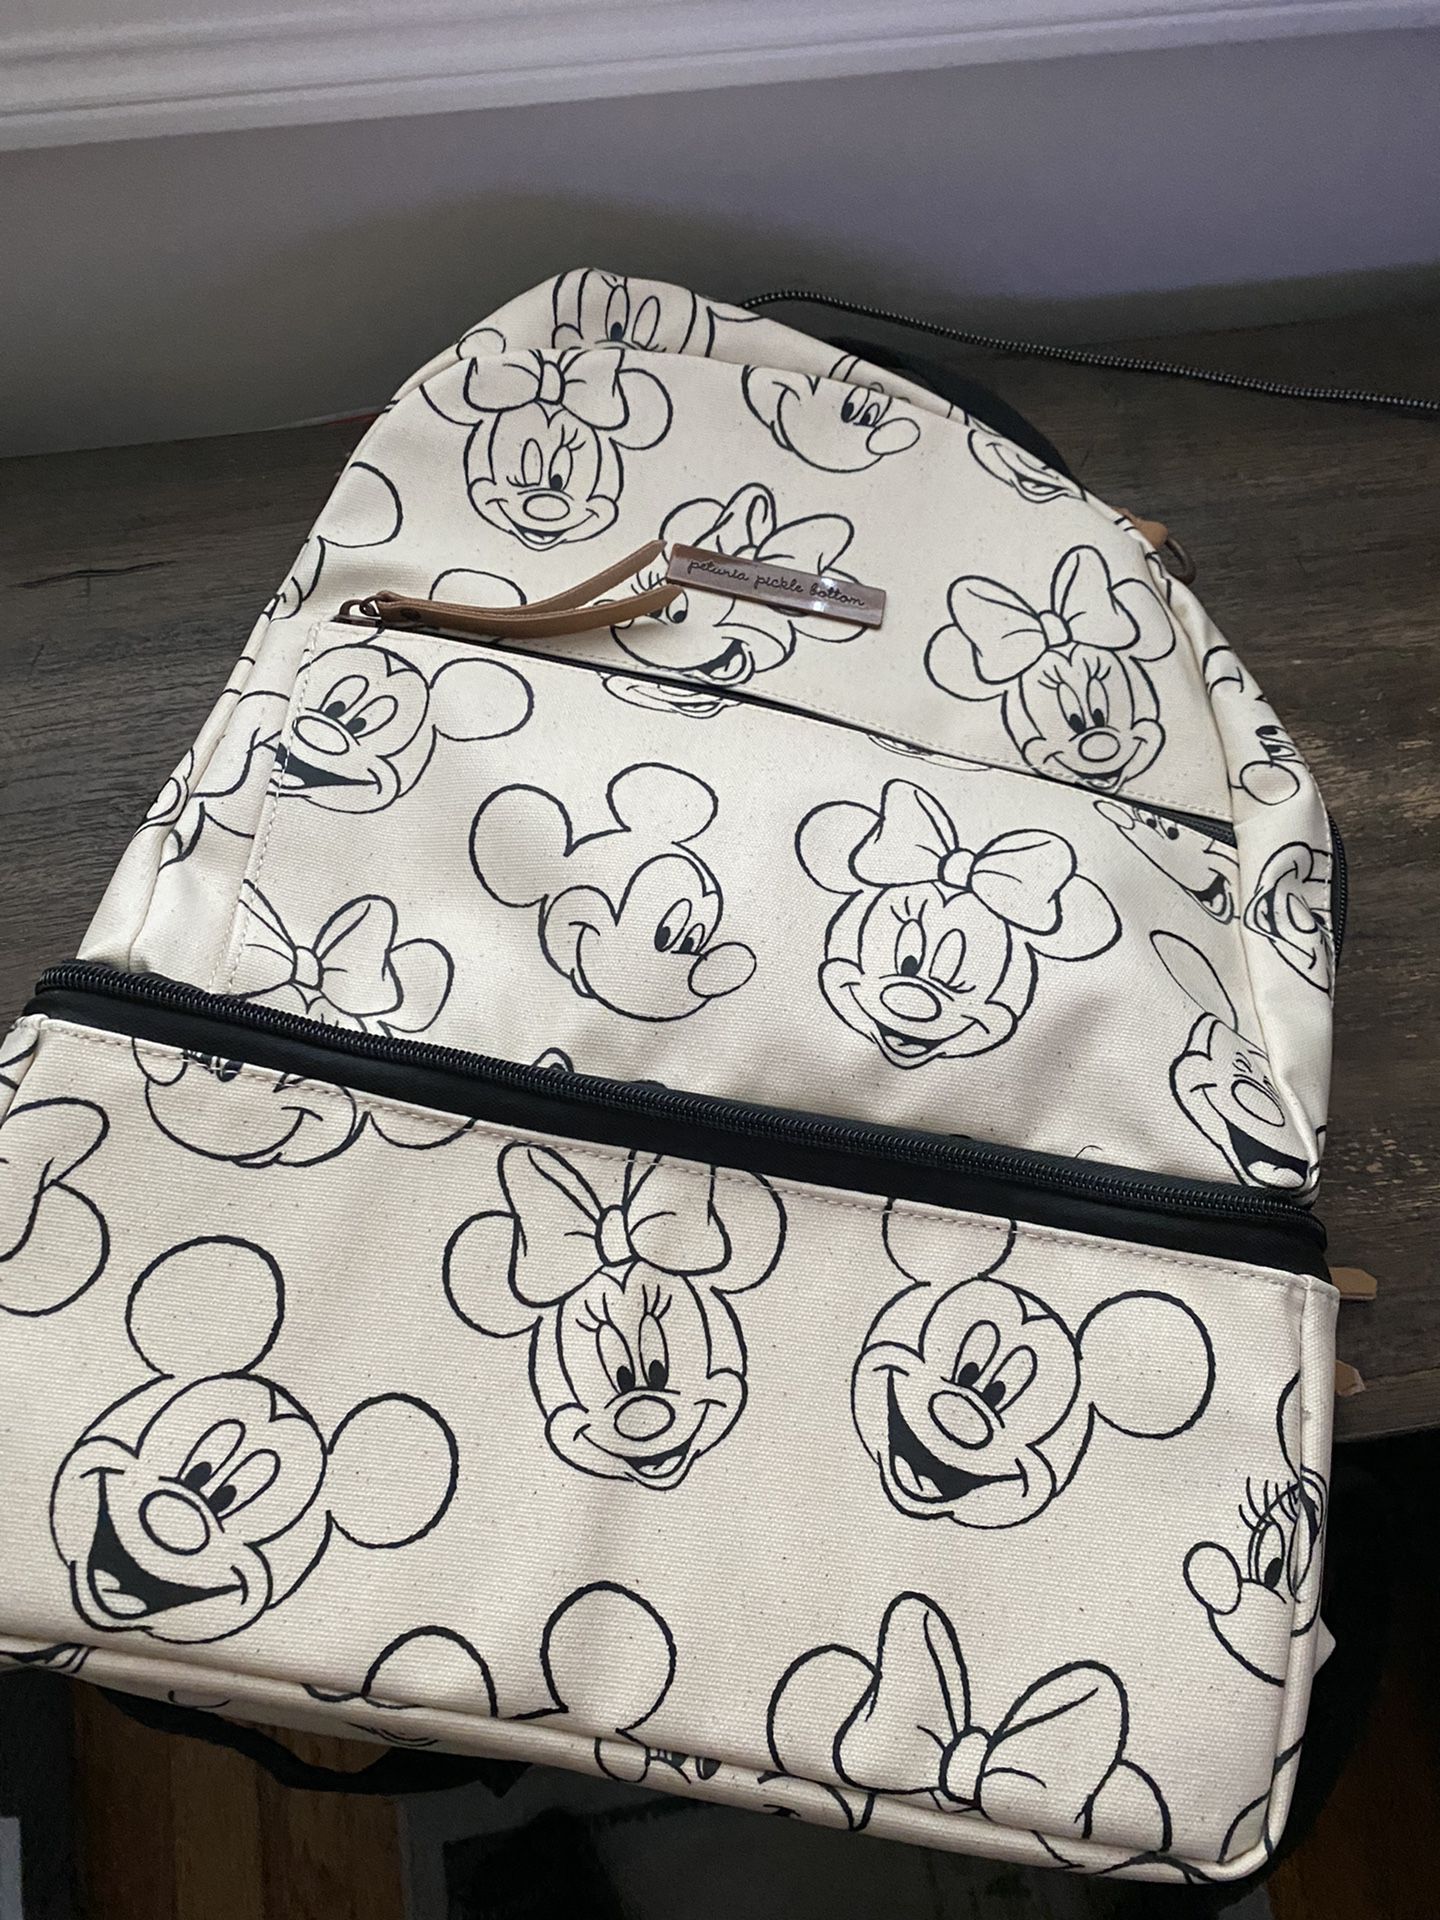 Petunia pickle bottom sketchbook Mickey and Minnie backpack